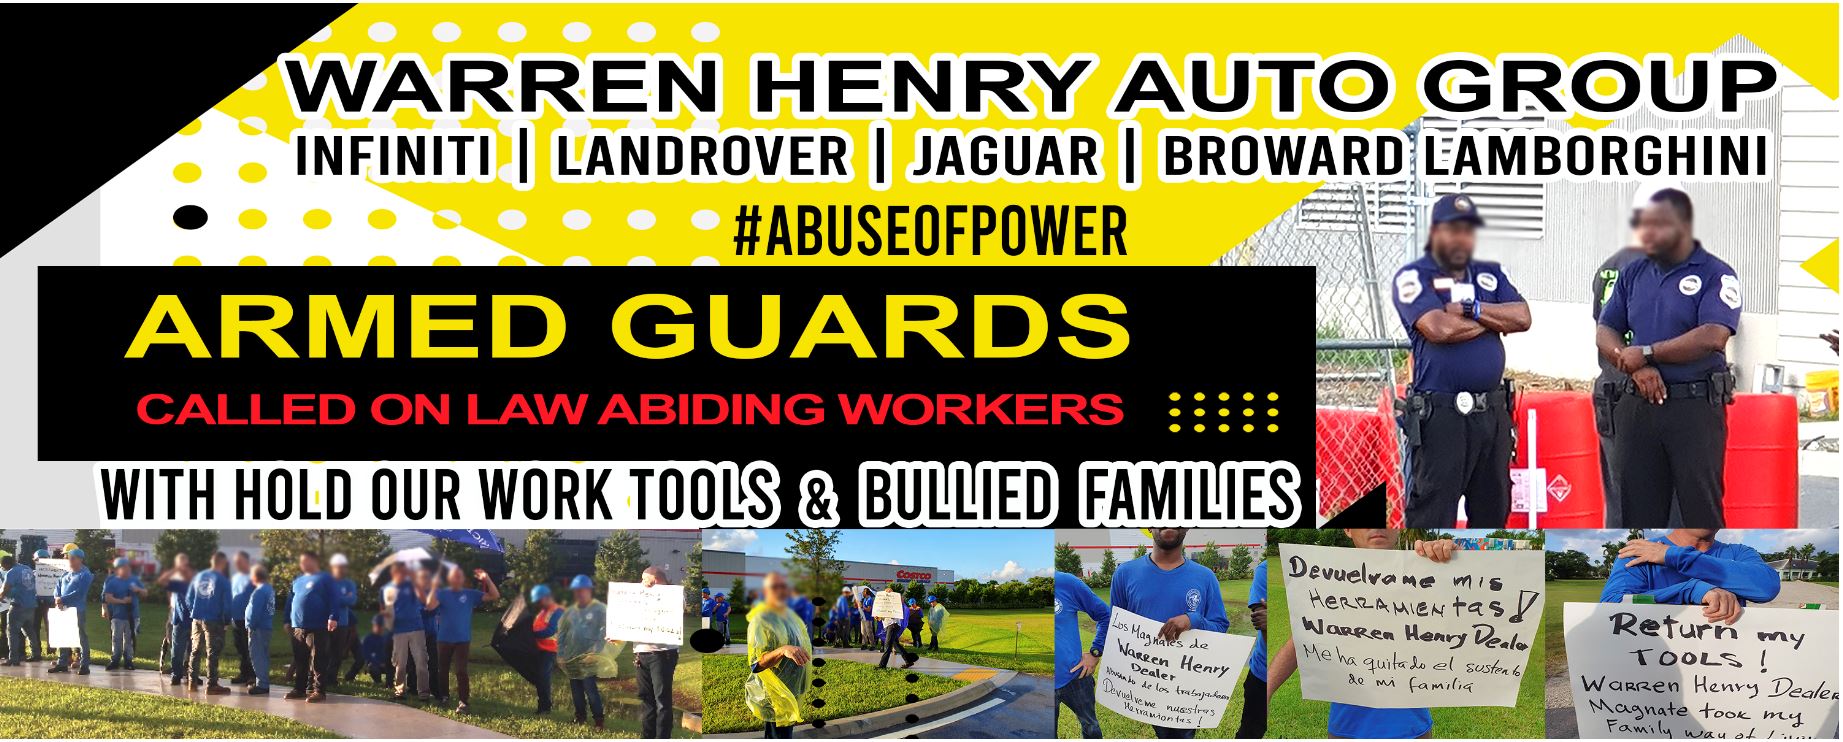 Warren Henry Auto  Calls Armed Guards on Worker